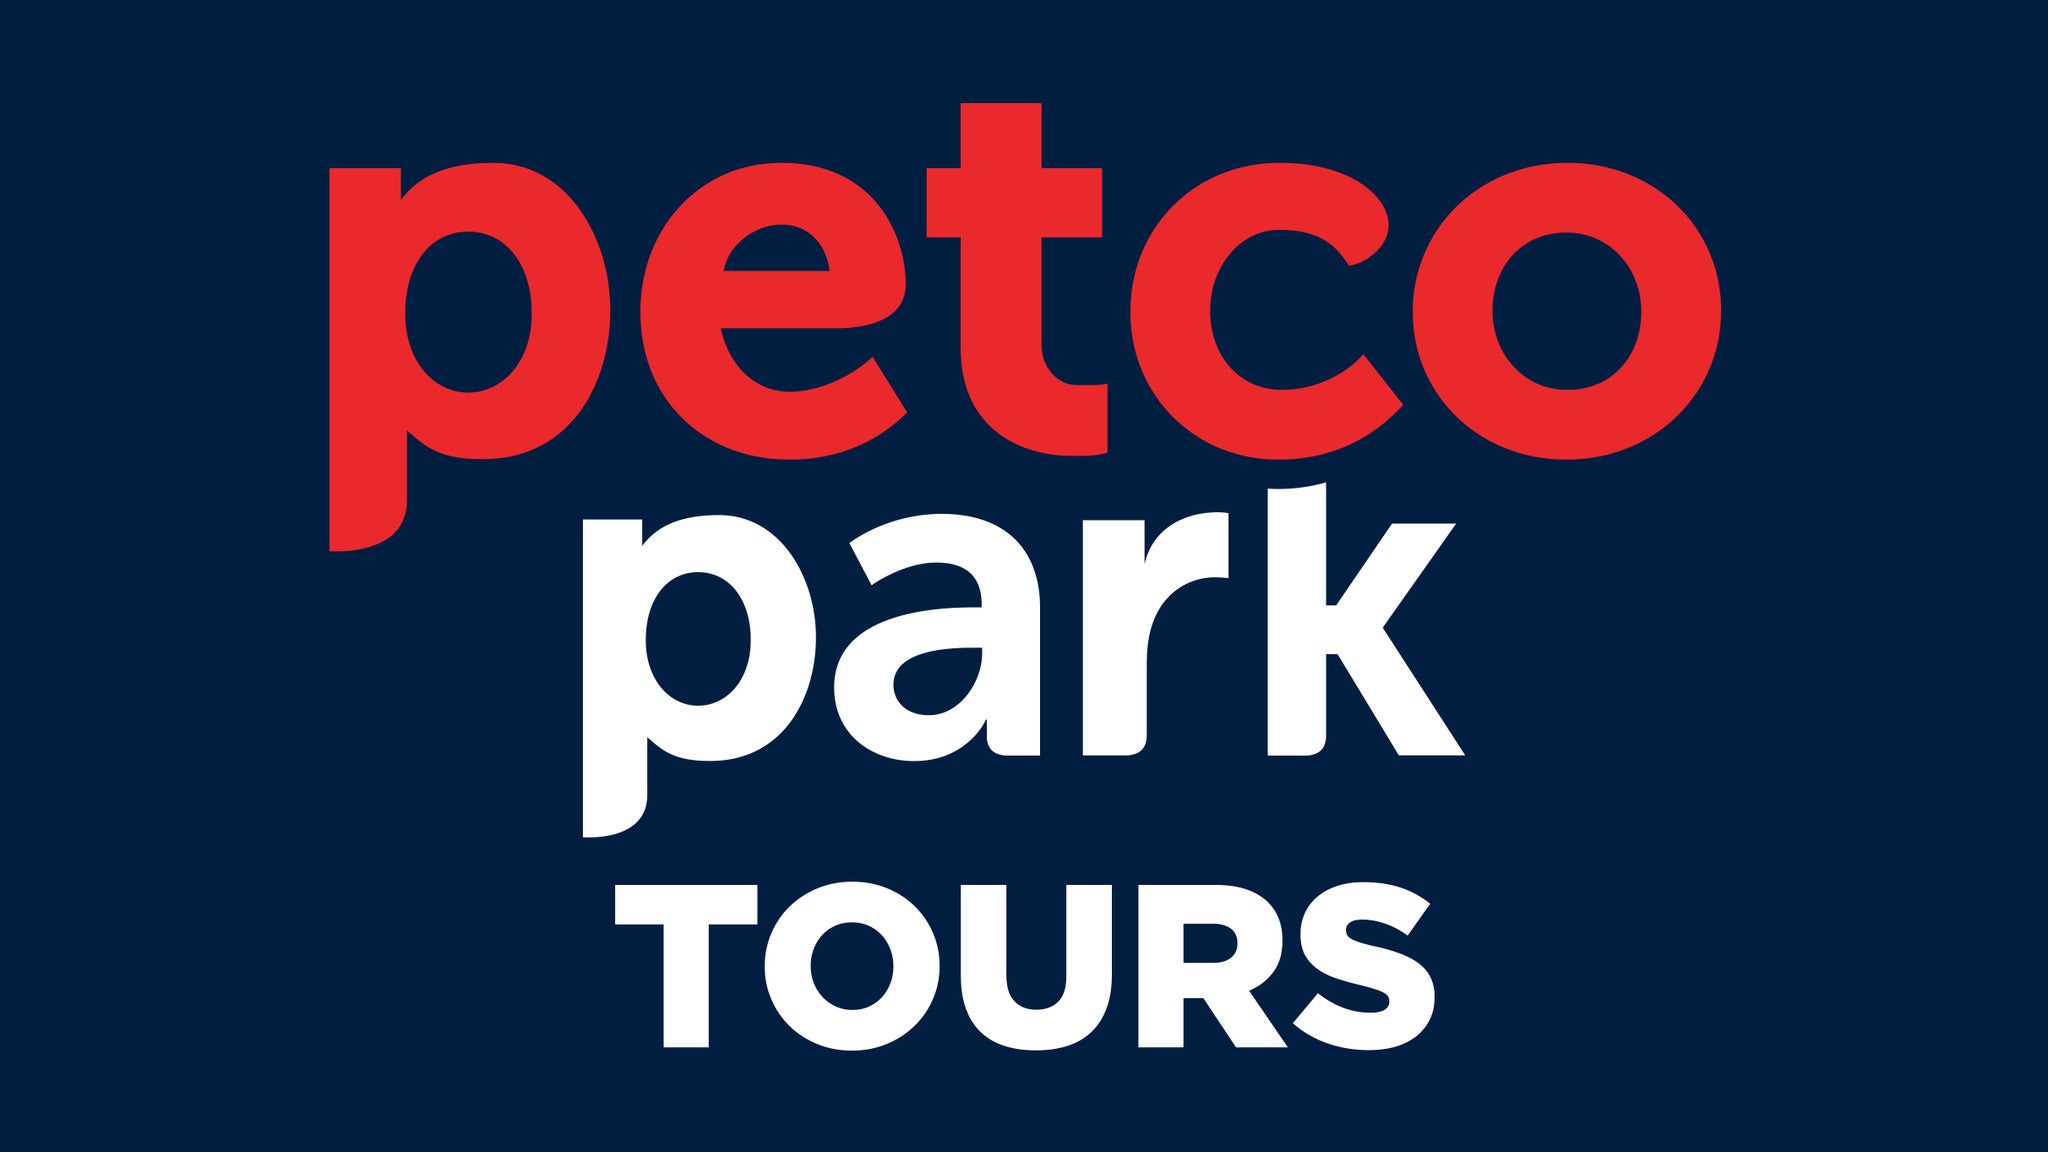 Petco Park Tours